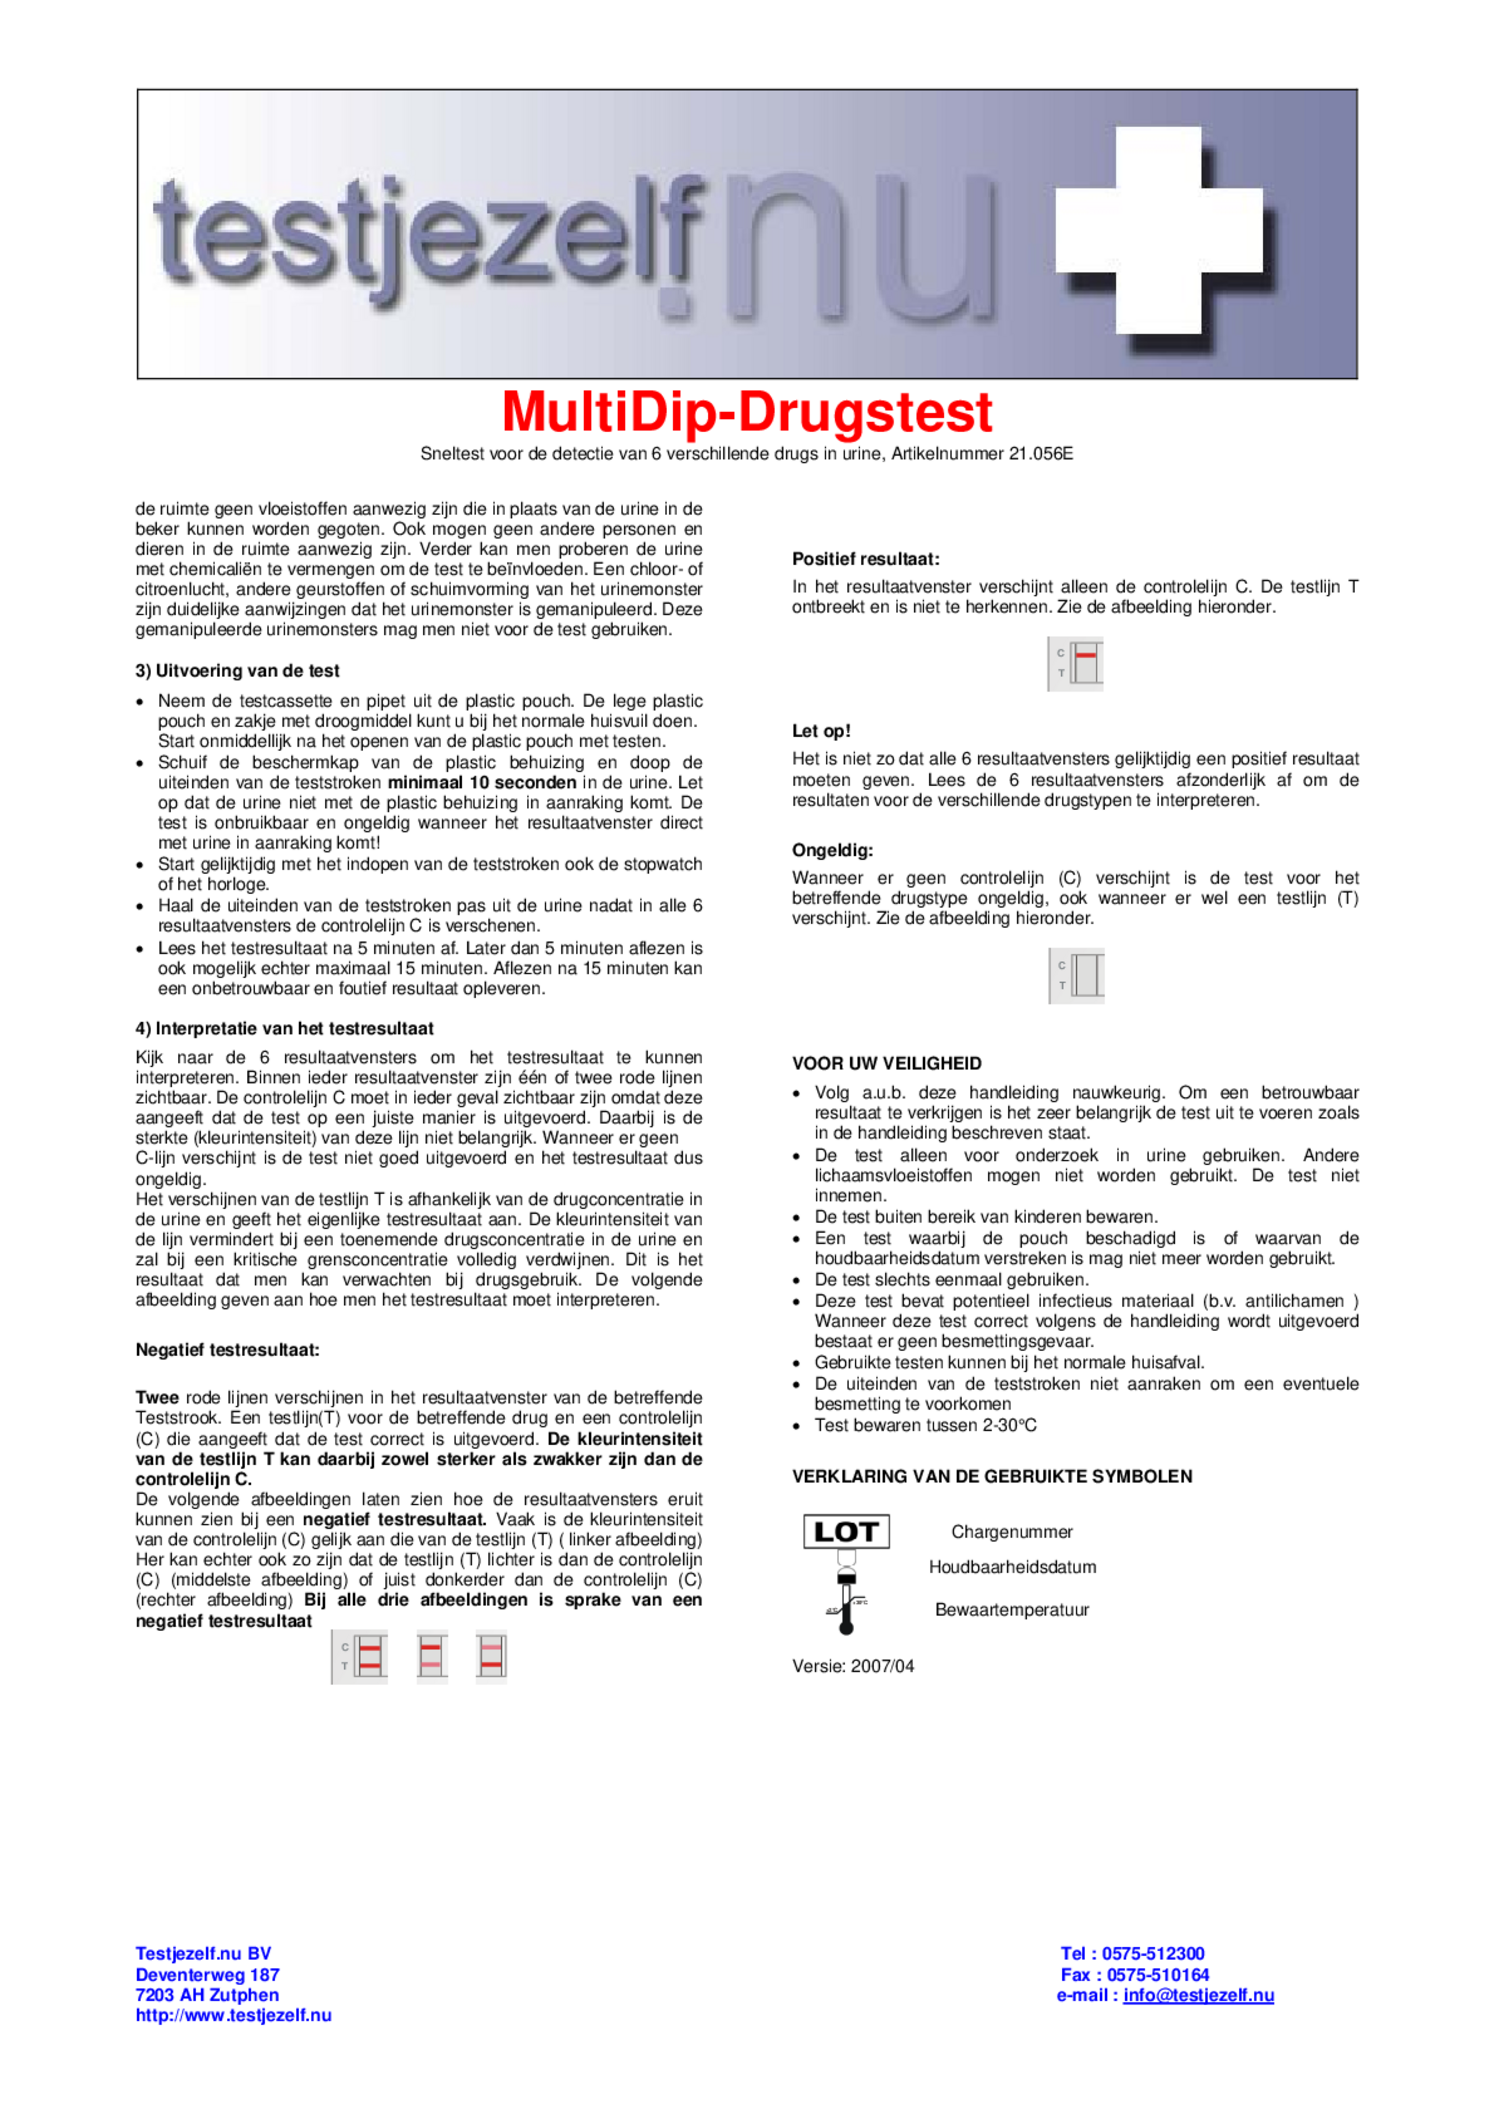 Drugstest Multi afbeelding van document #2, gebruiksaanwijzing